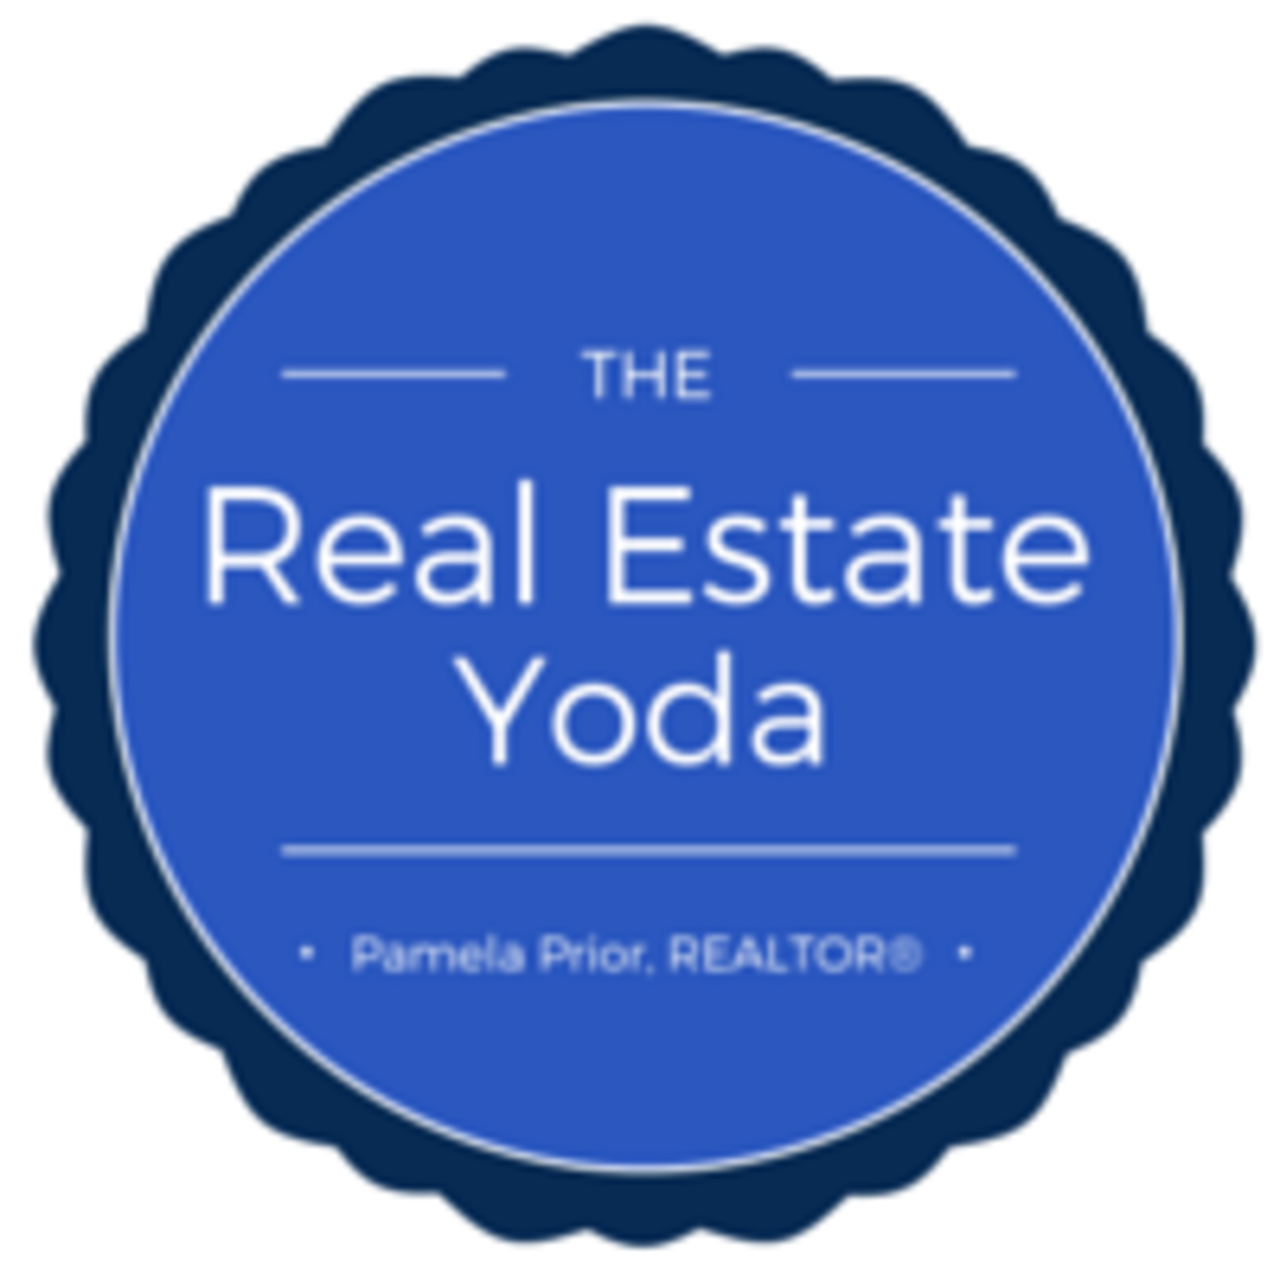 Real Estate Yoda